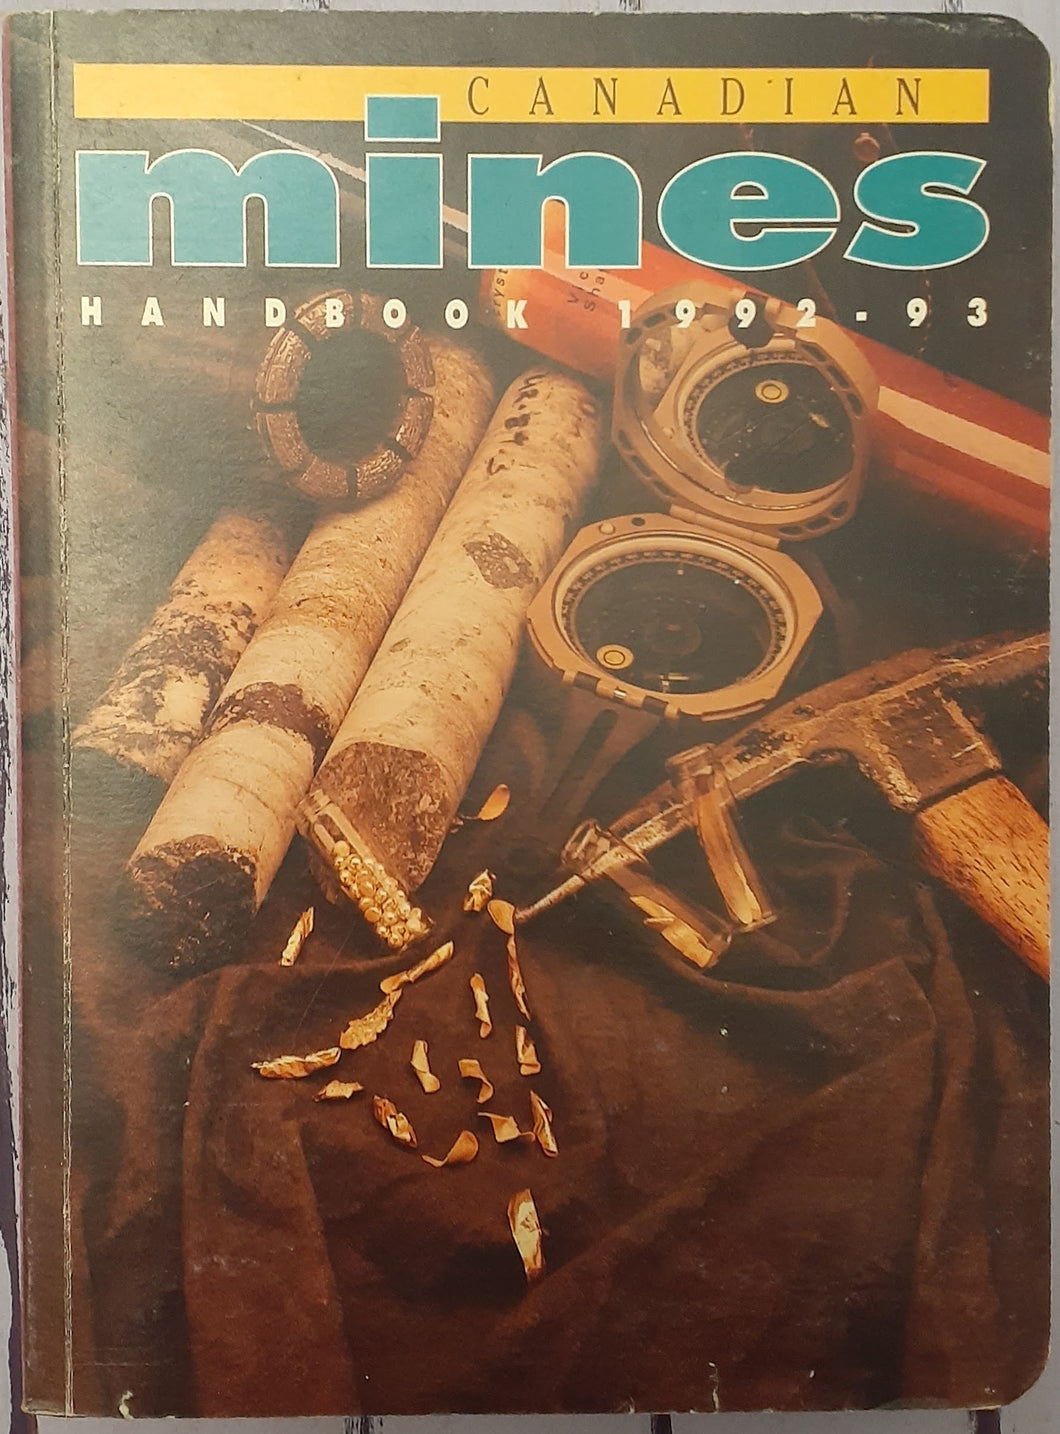 Canadian Mines Handbook 1992 -93